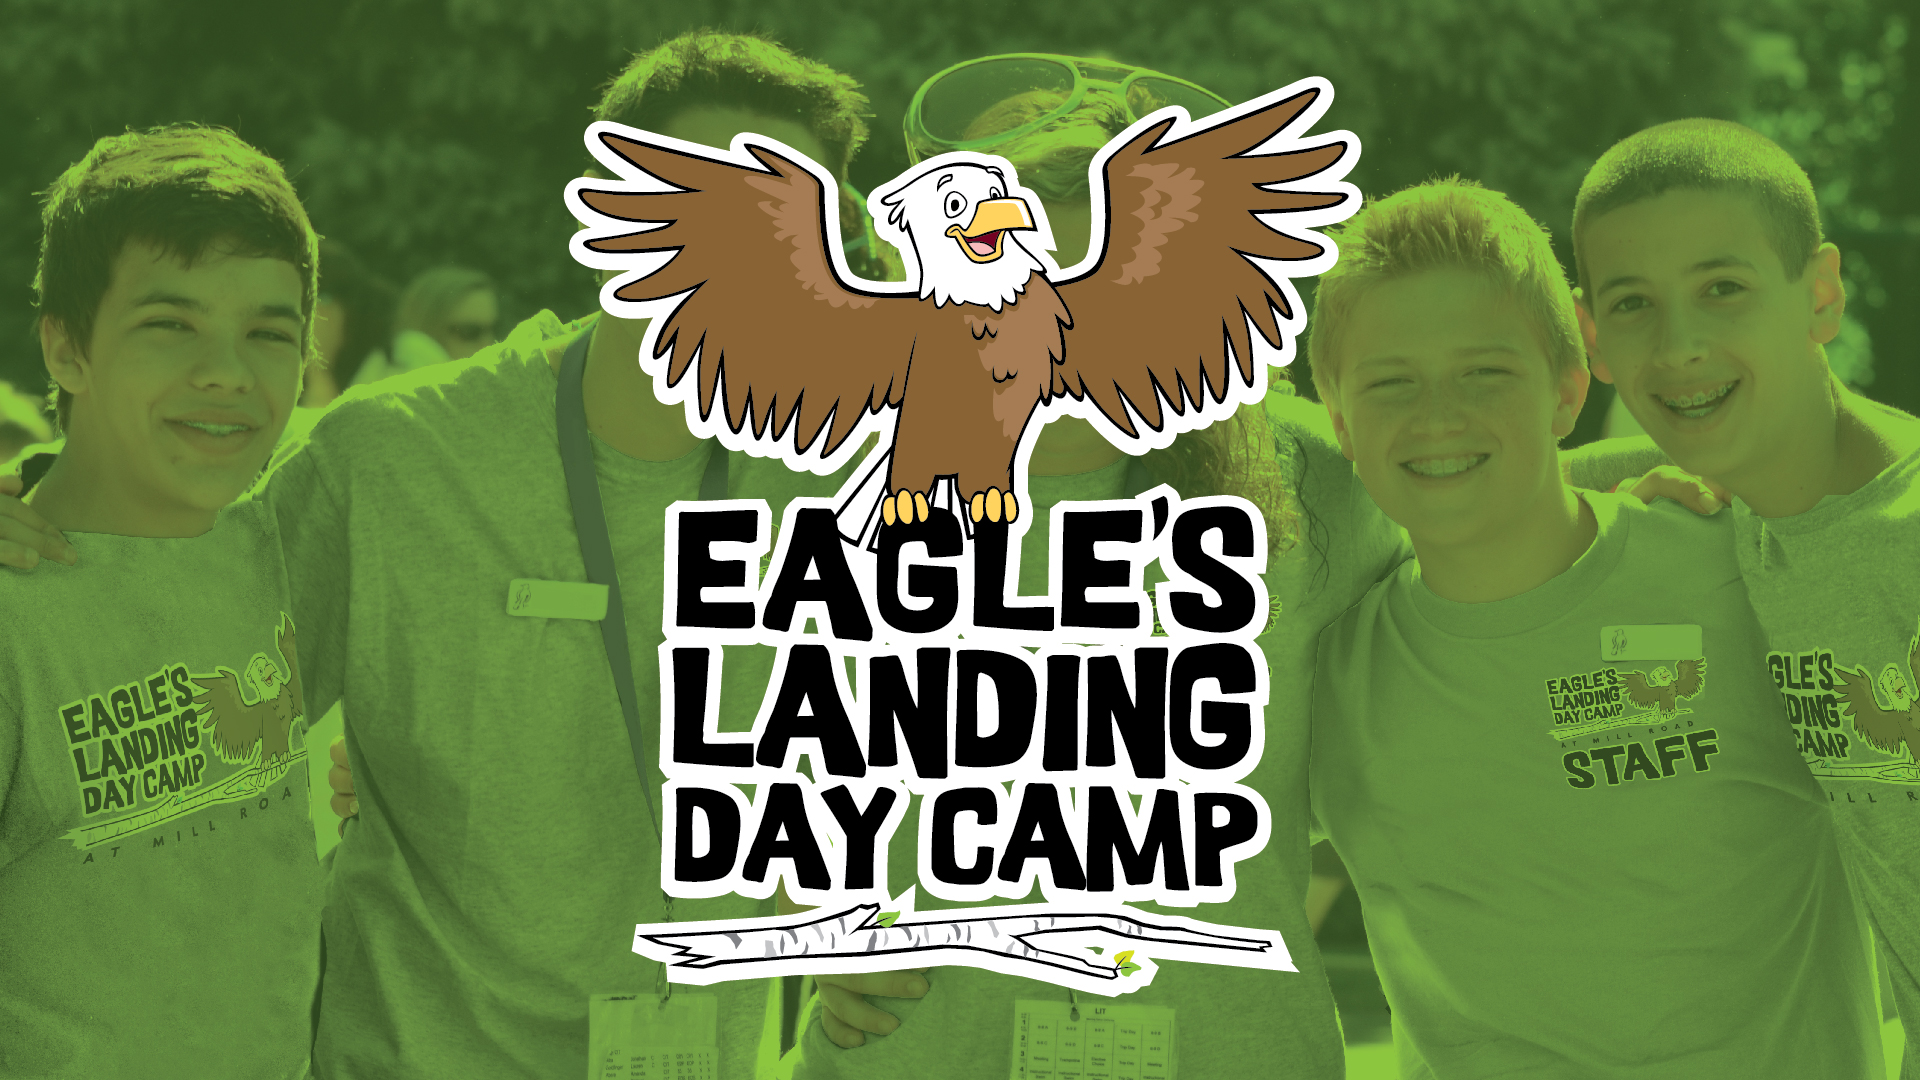 Eagle's Landing Day Camp